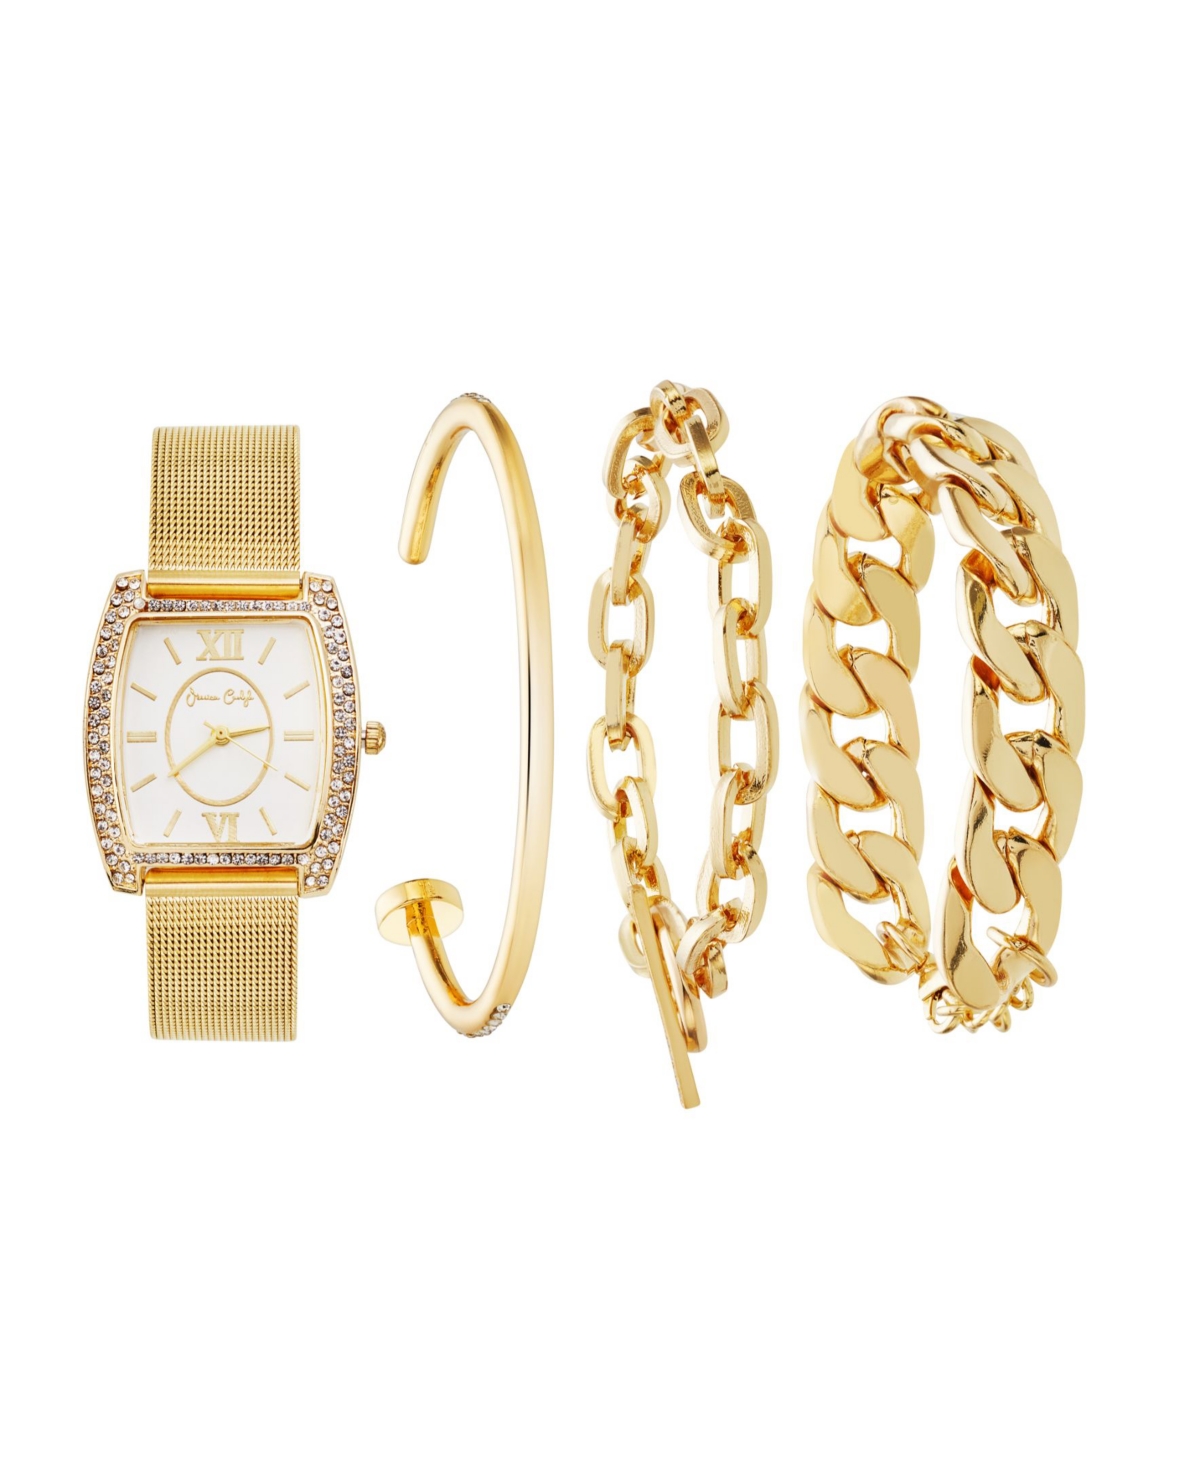 Jessica Carlyle Jessica Carlye Women's Quartz Movement Gold-Tone Mesh Bracelet Analog Watch, 29mm with Stackable Bracelet Set